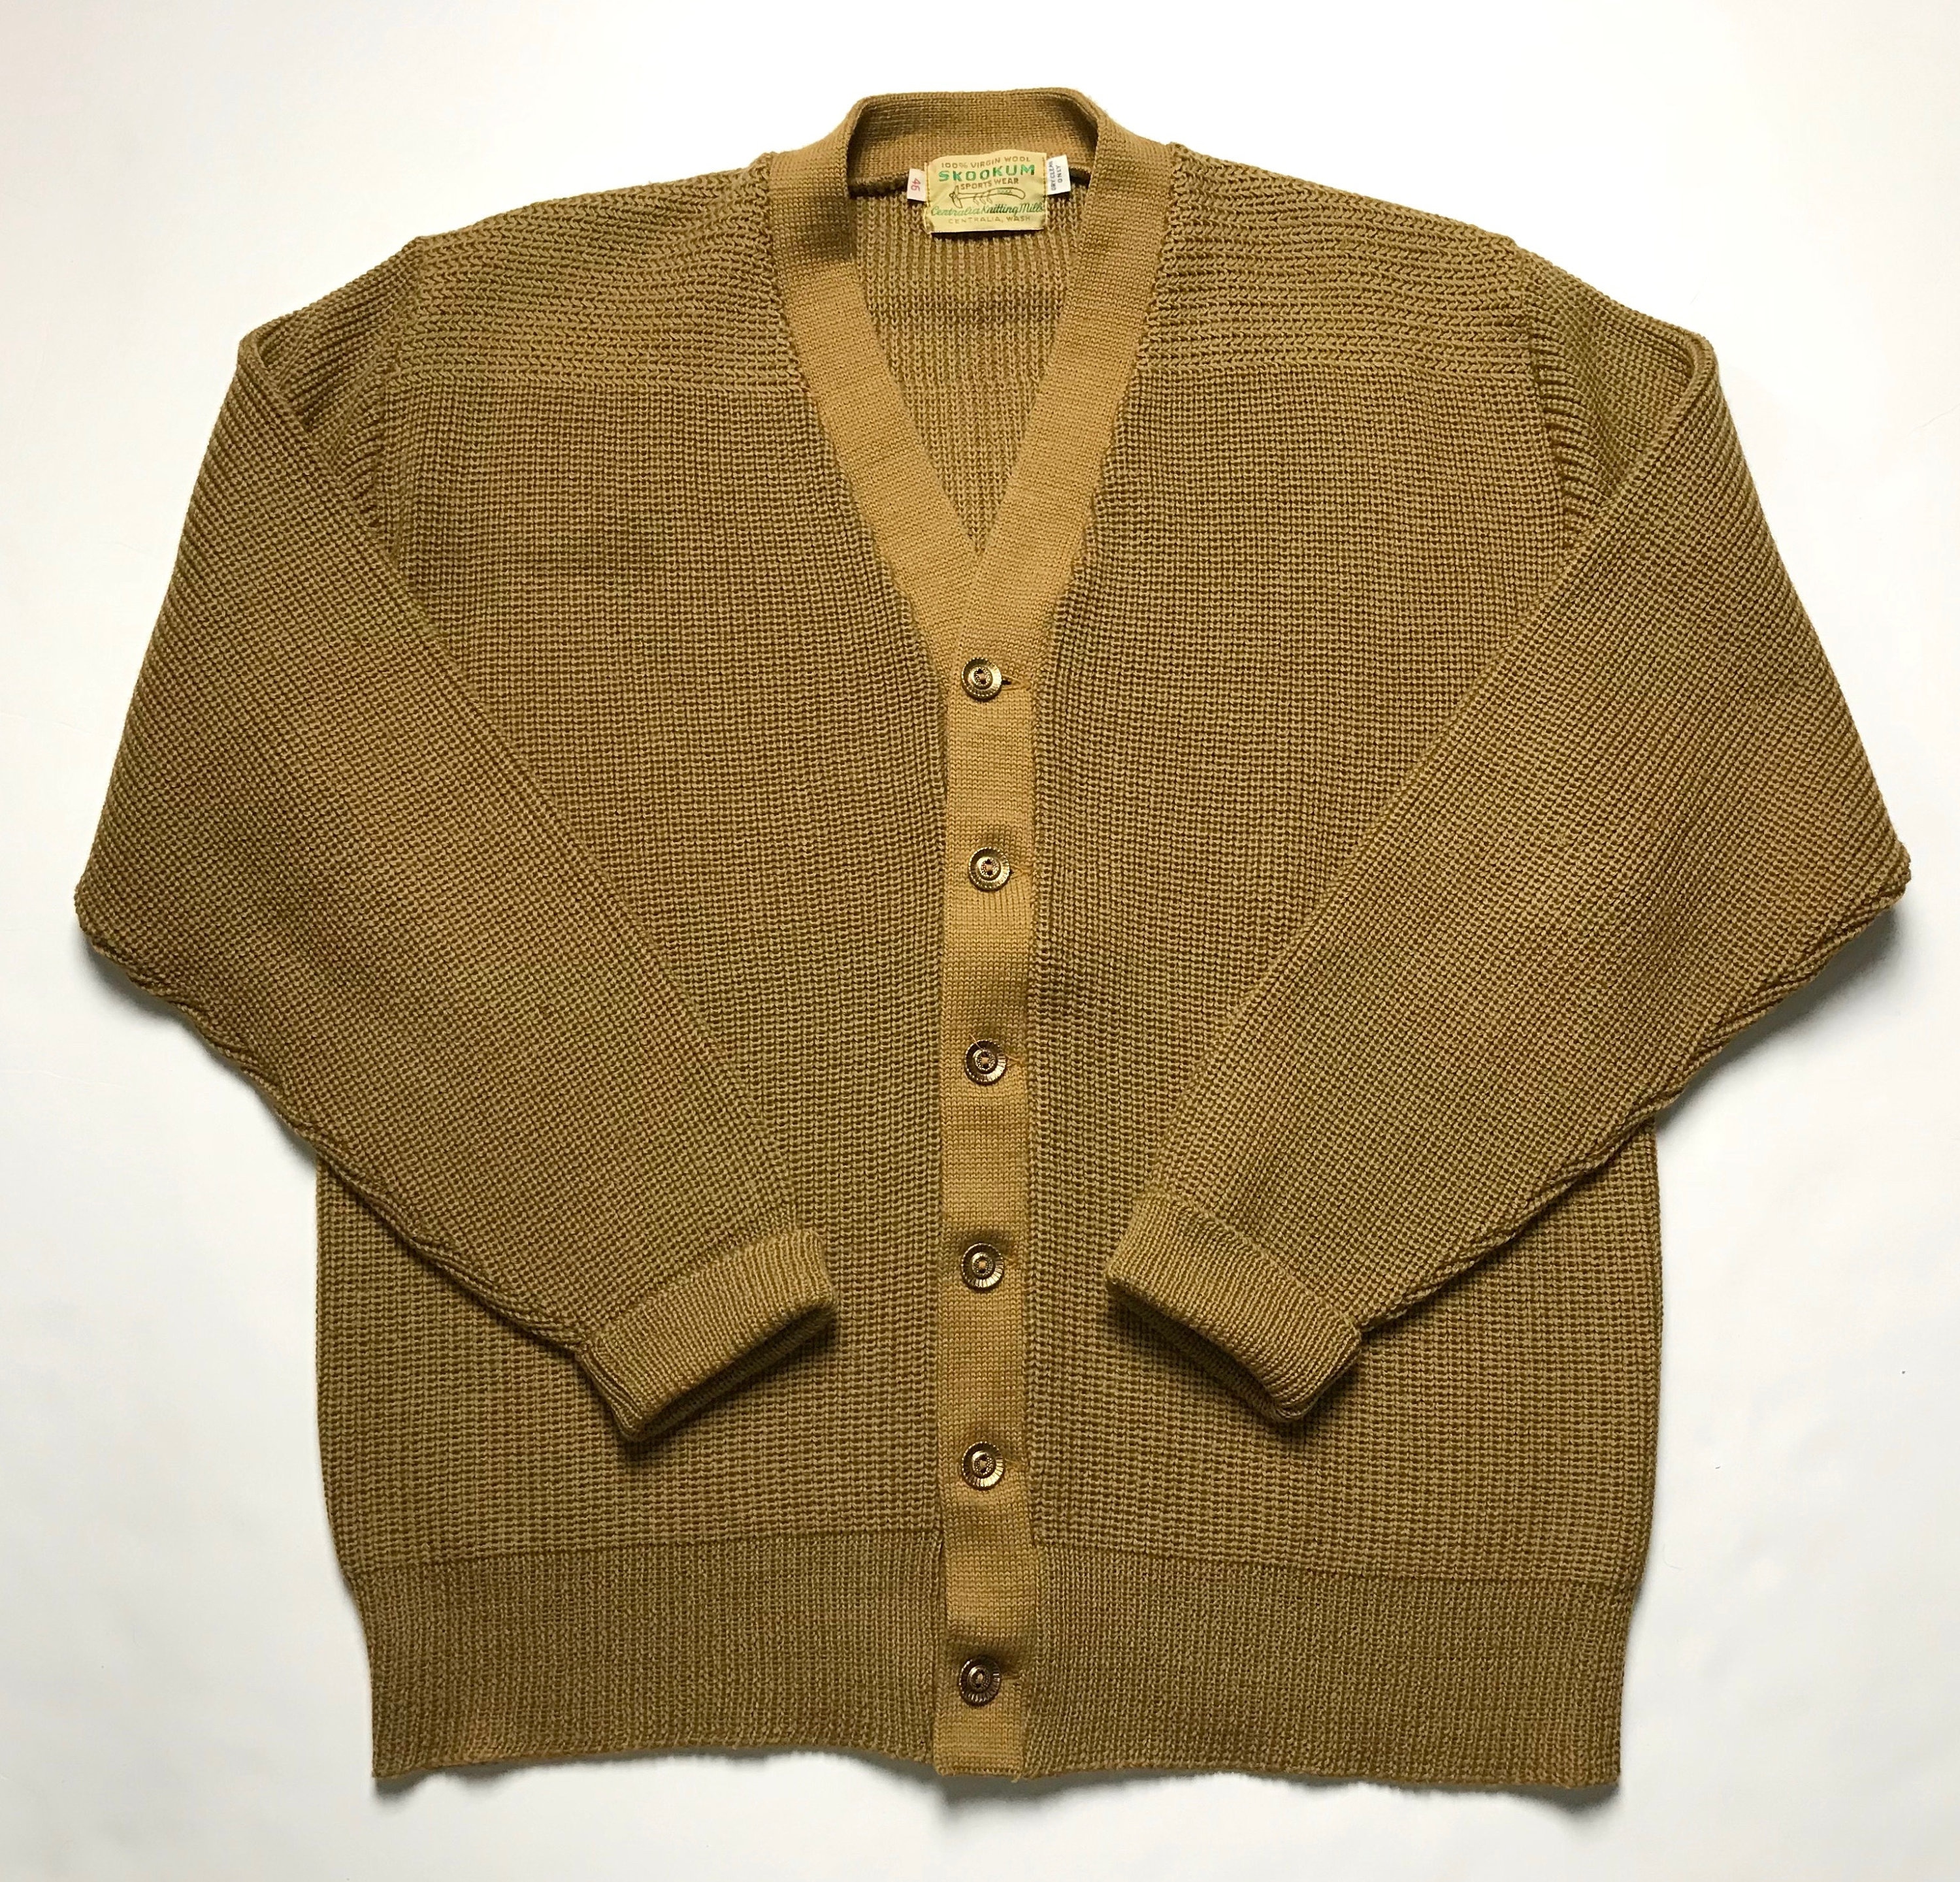 Vintage 1950s/1960s SKOOKUM Centralia Knitting Mills Cardigan size